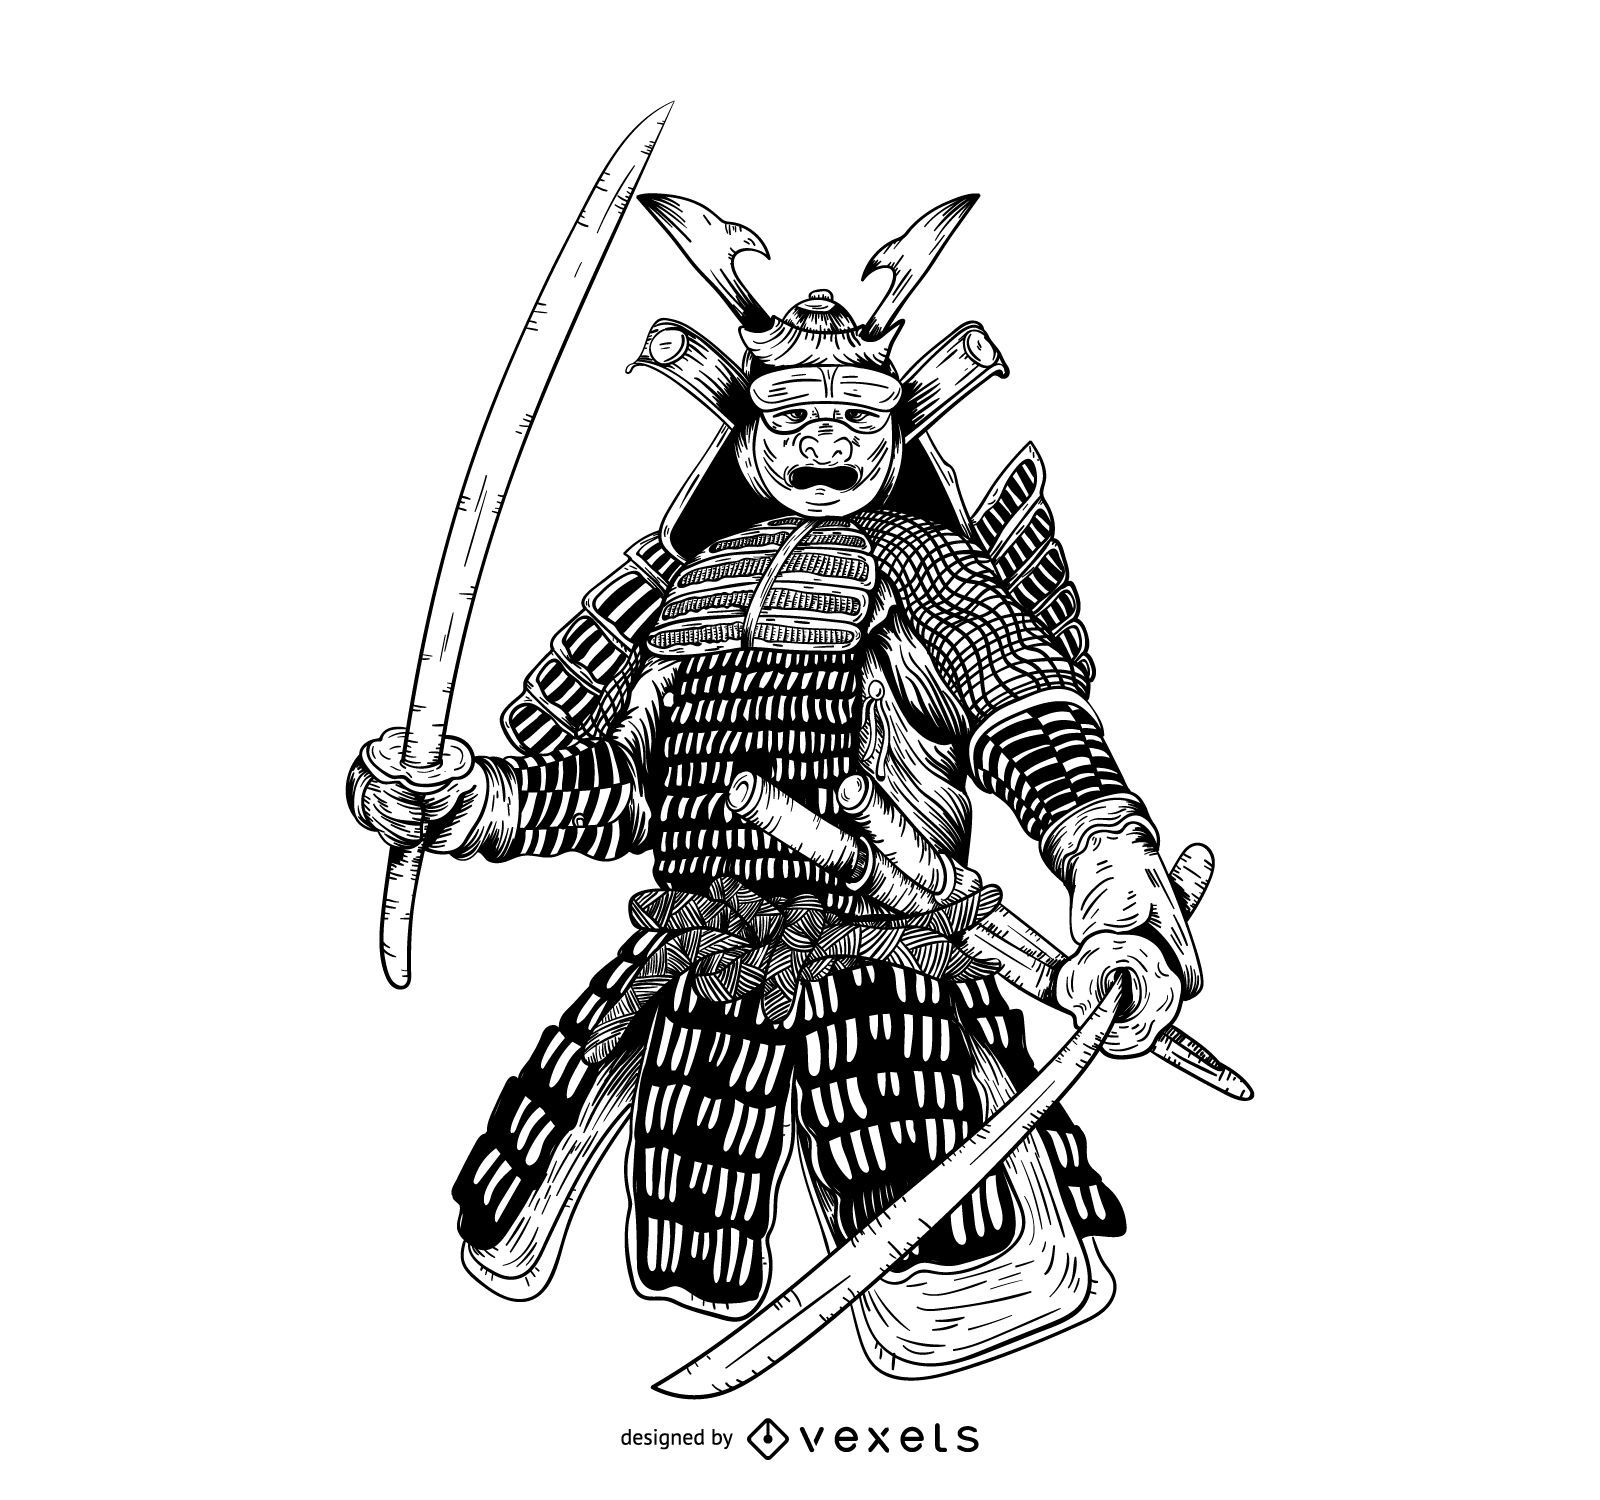 Samurai hand drawn graphic illustration